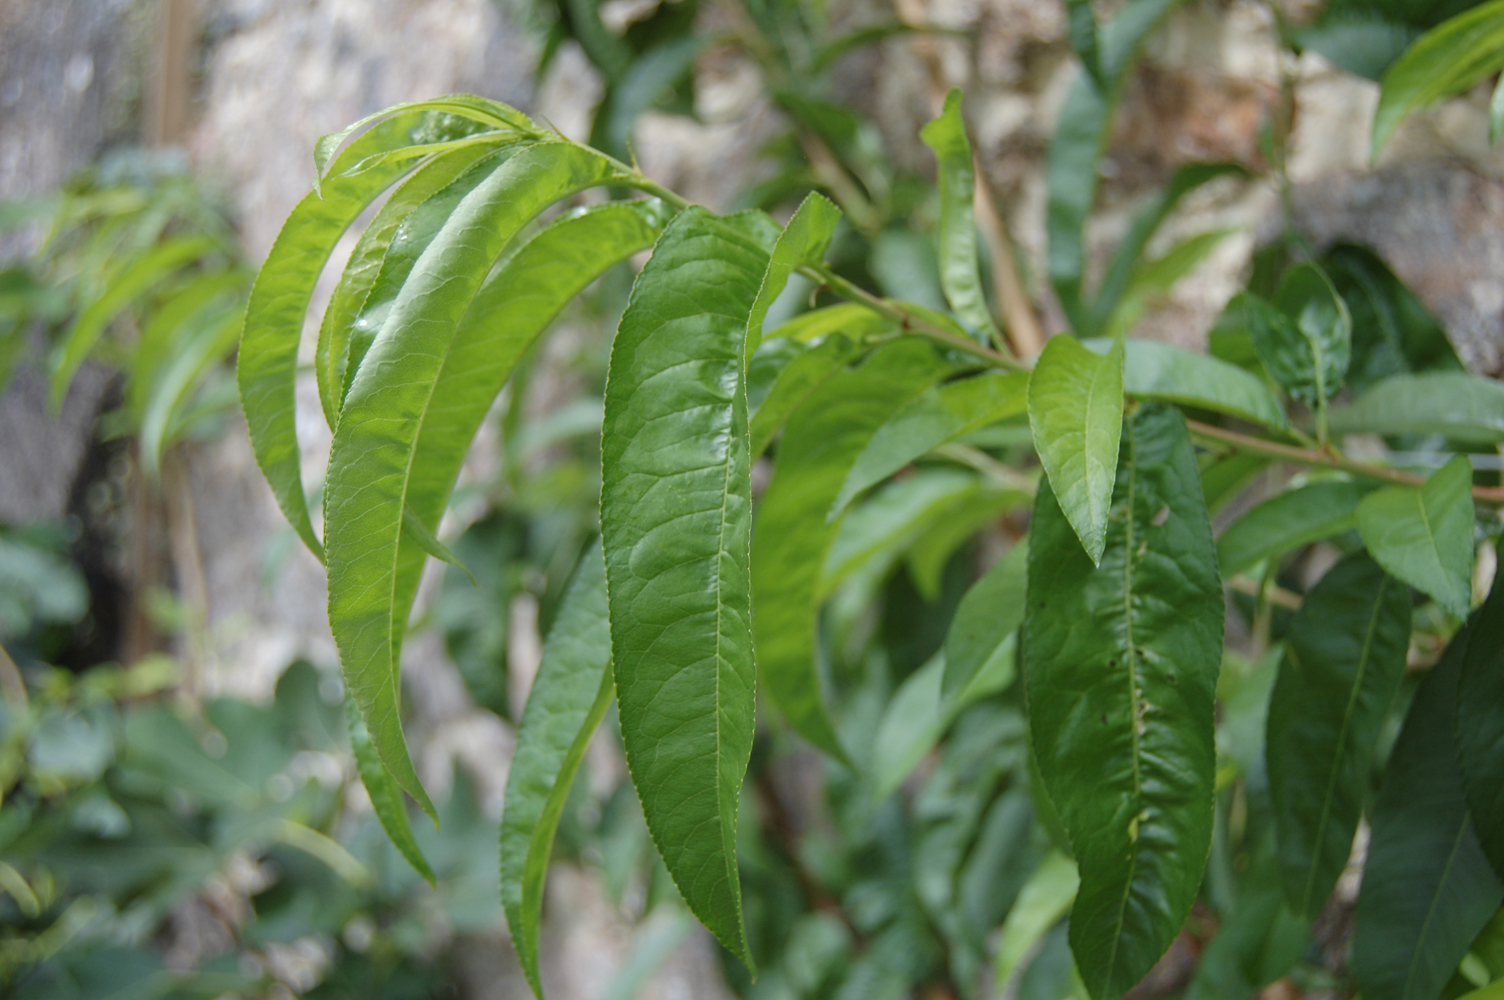 Nectarine-leaves